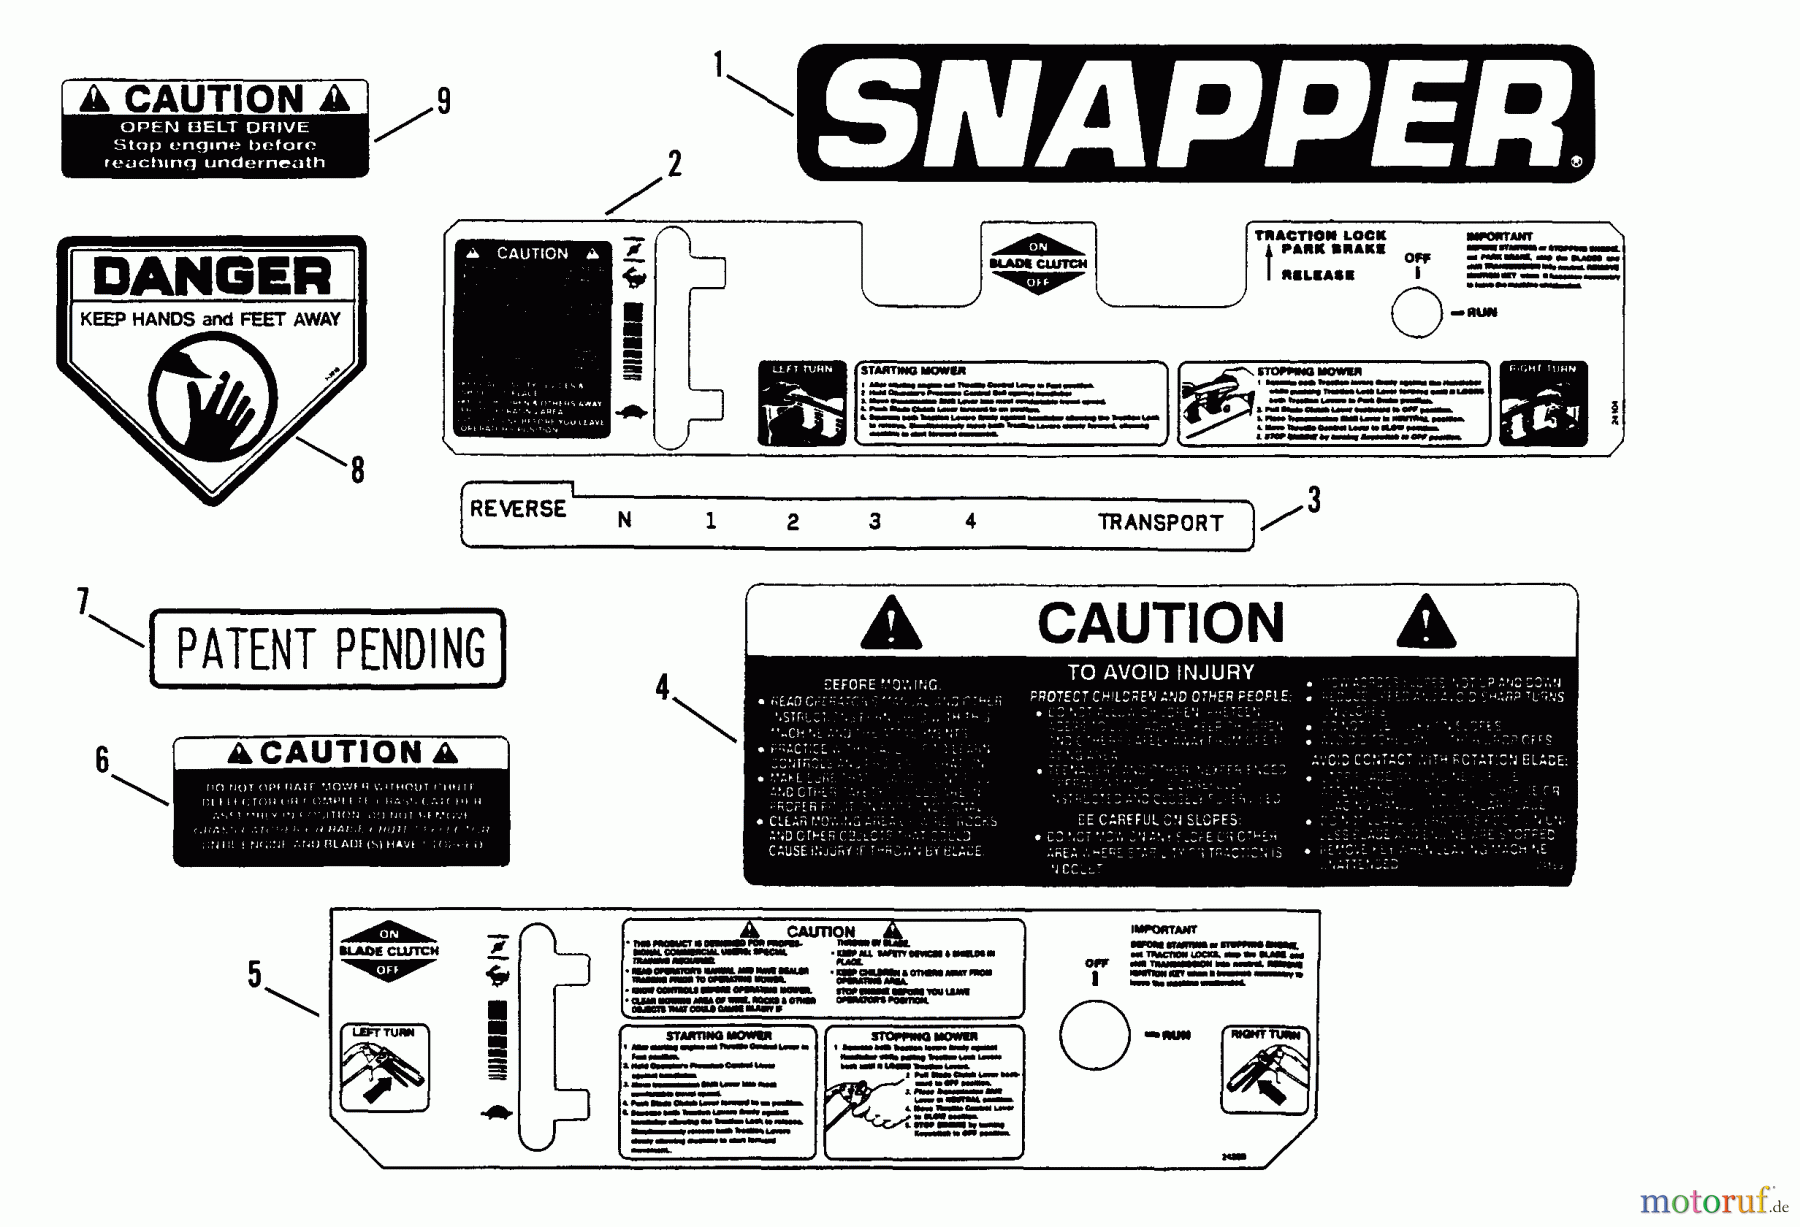  Snapper Rasenmäher für Großflächen PP71252KW - Snapper Wide-Area Walk-Behind Mower, 12.5 HP, Gear Drive, Pistol Grip, Series 2 Decals